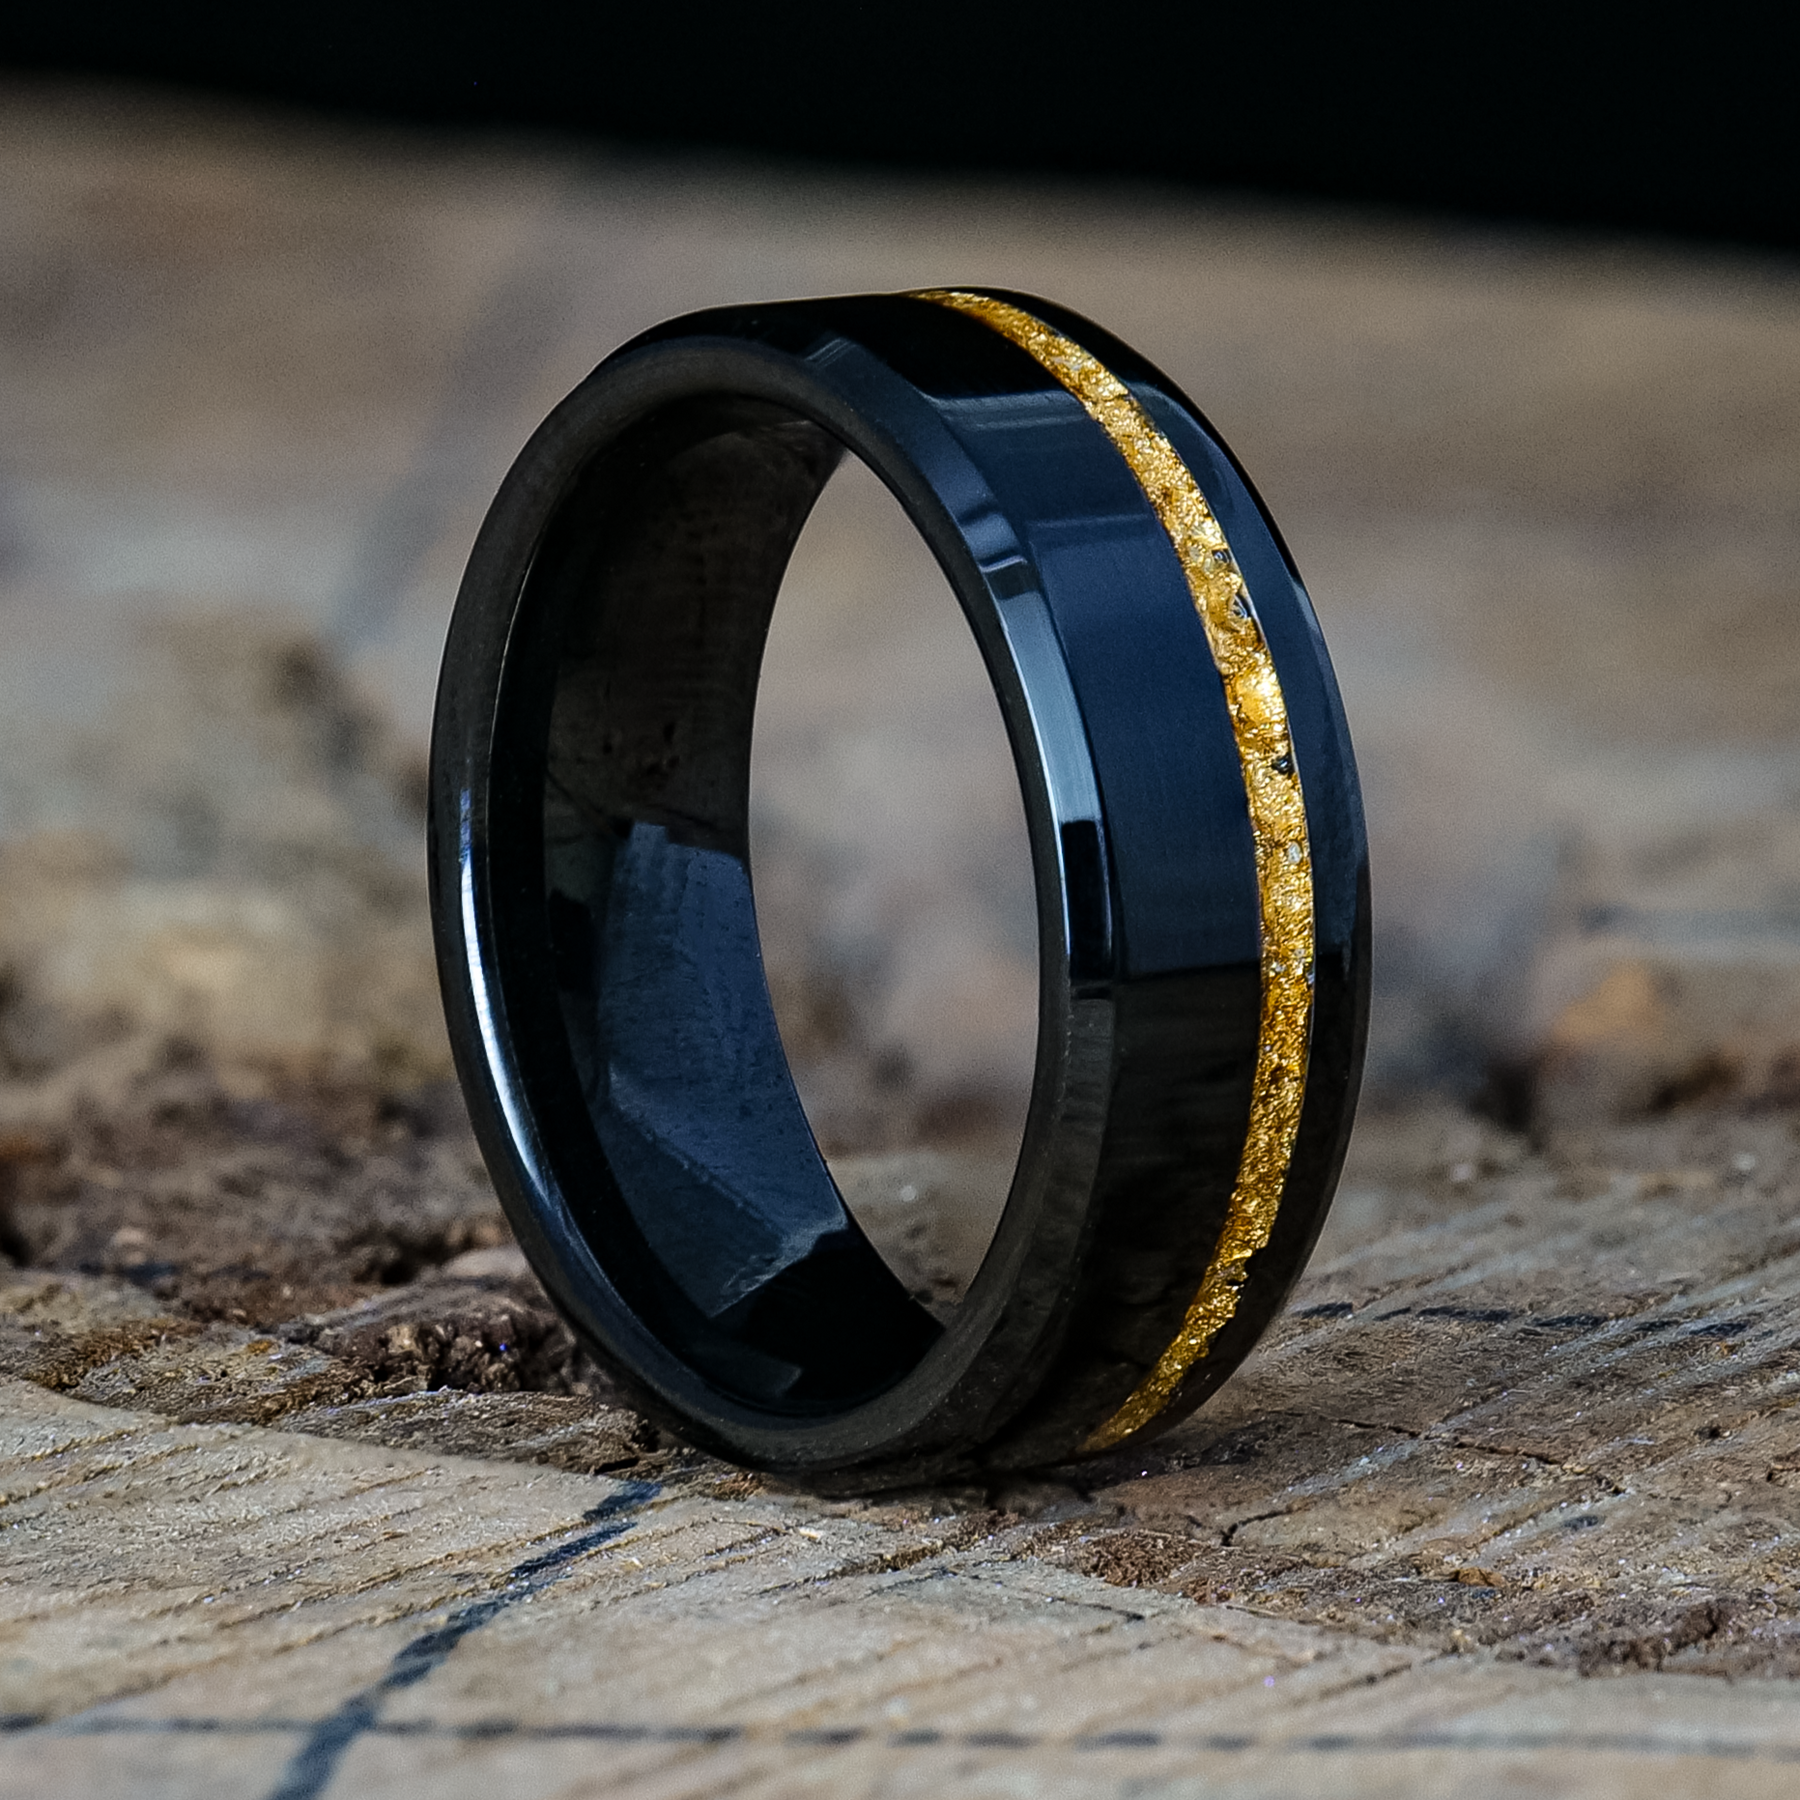 24K Gold Leaf Ring on Black Ceramic | Patrick Adair Designs